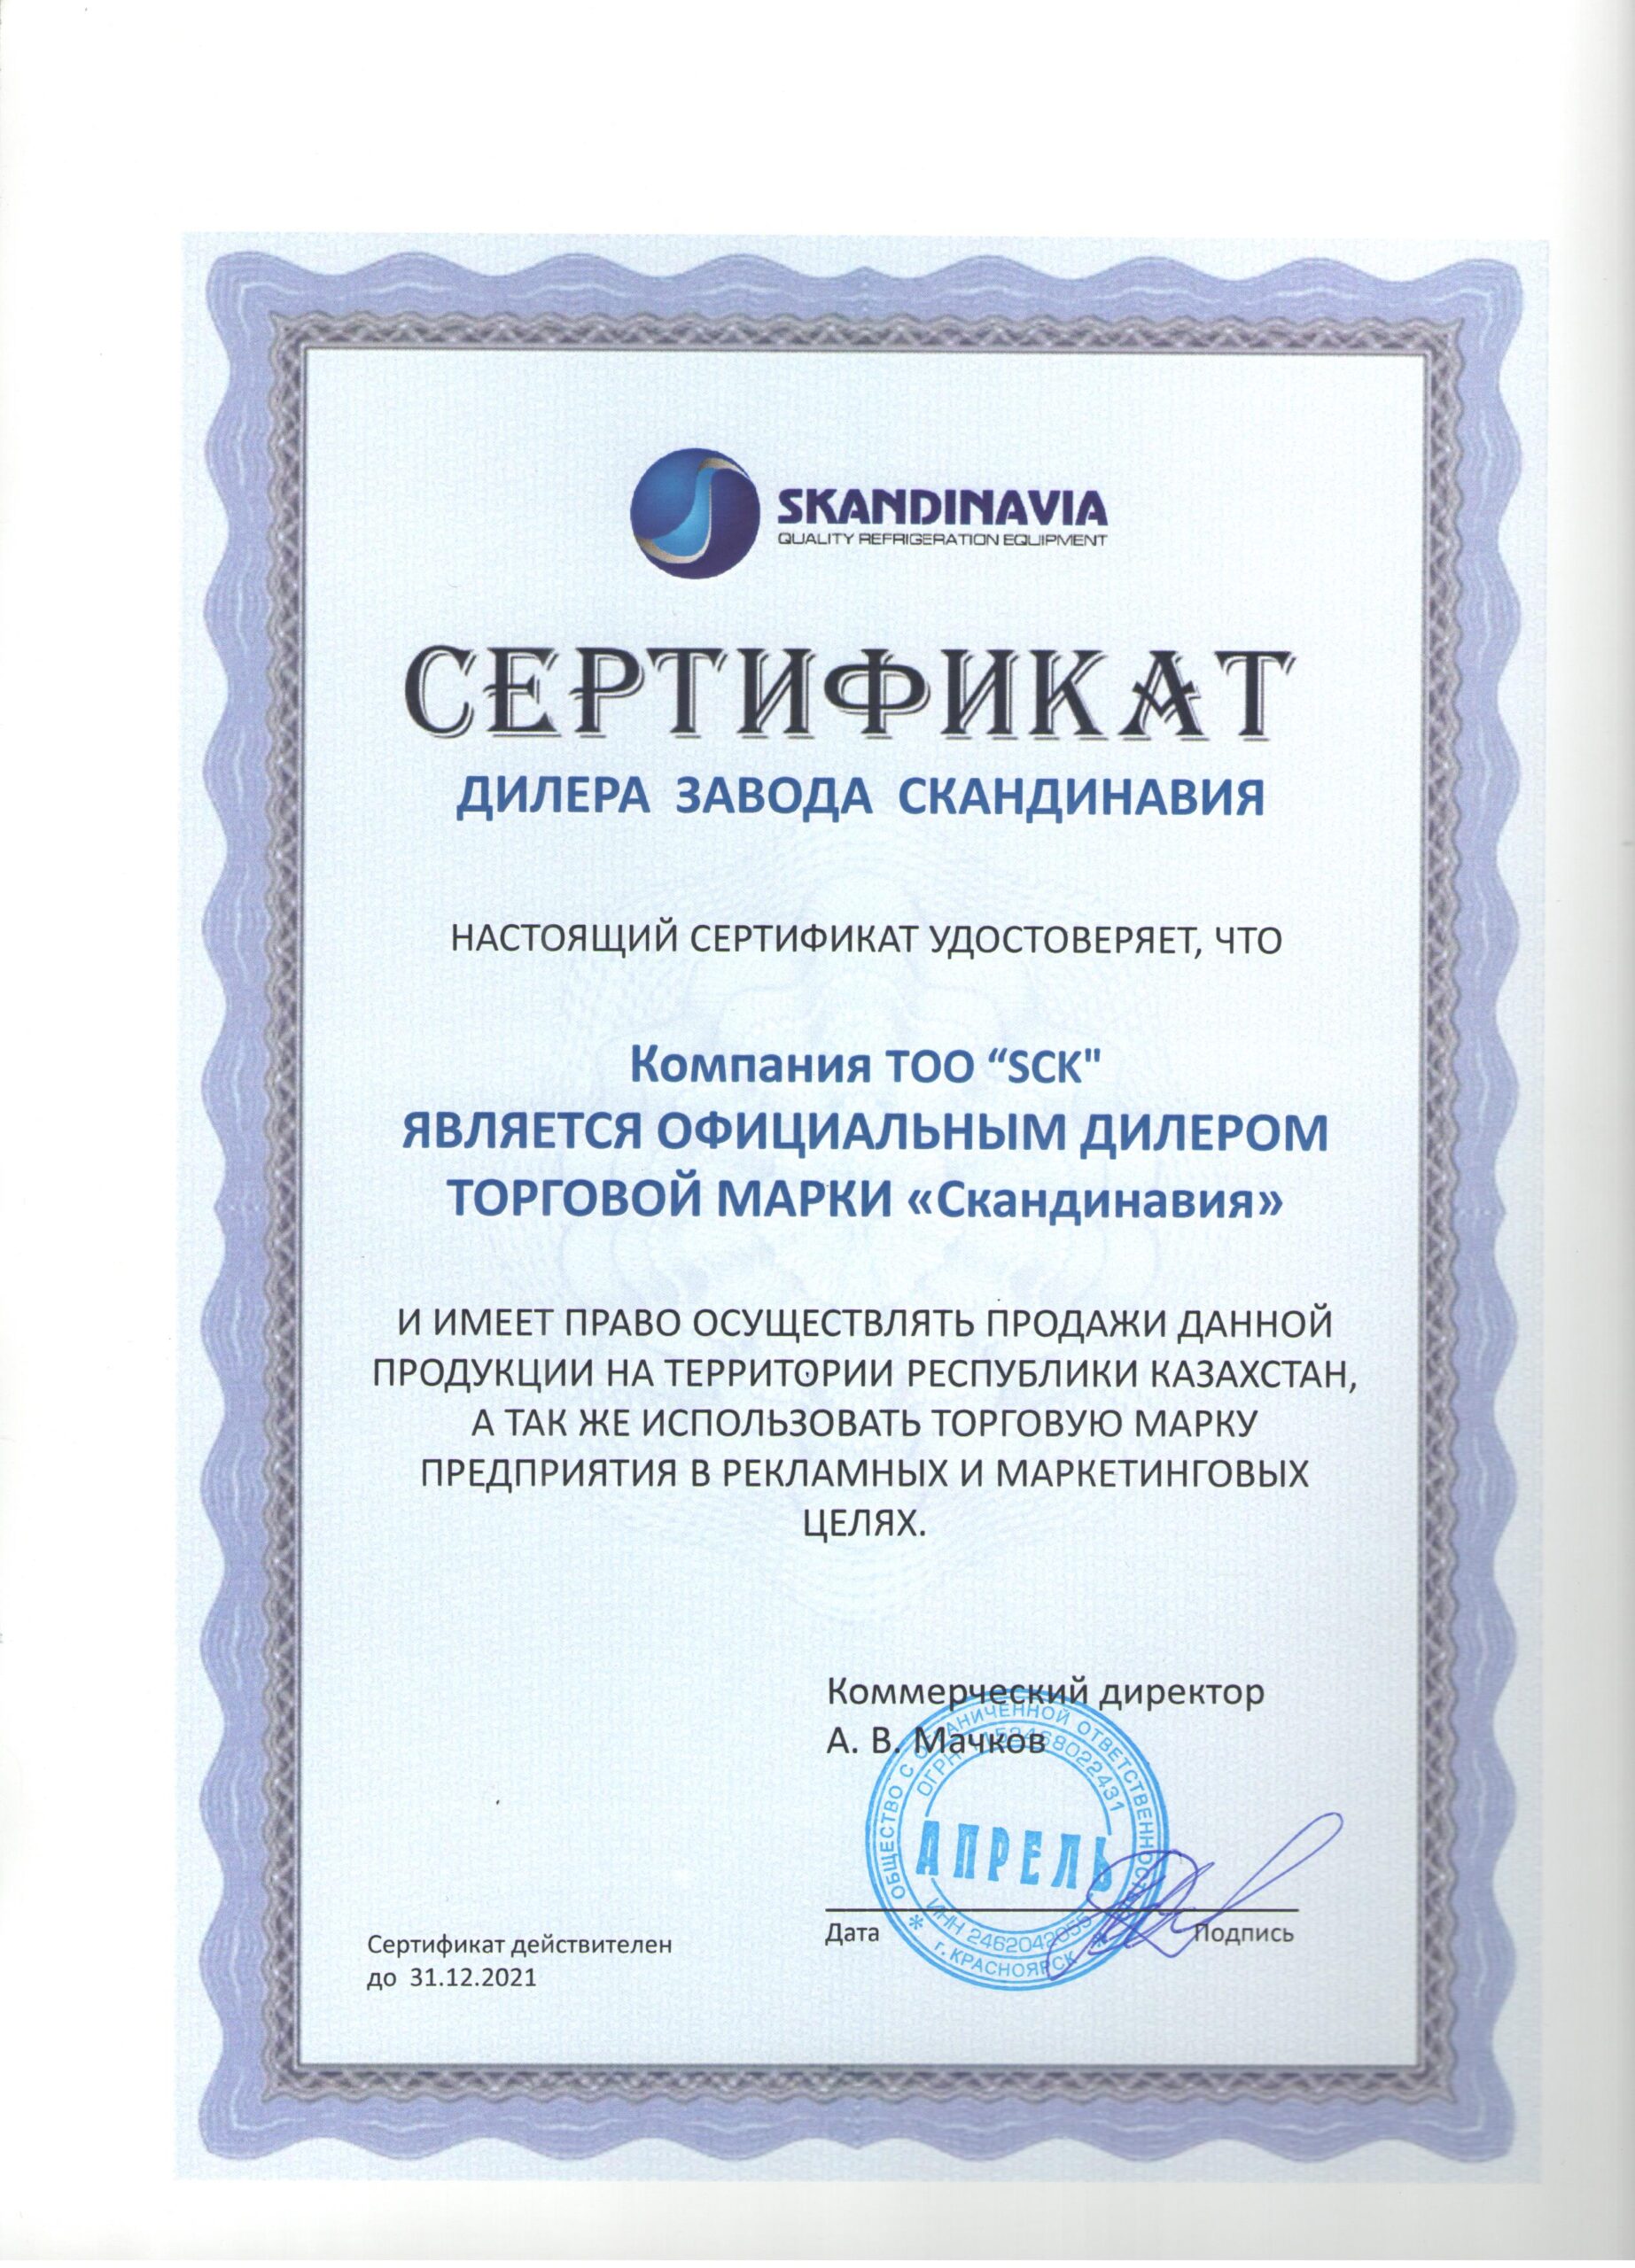 SCK сертификат дилера SKANDINAVIA